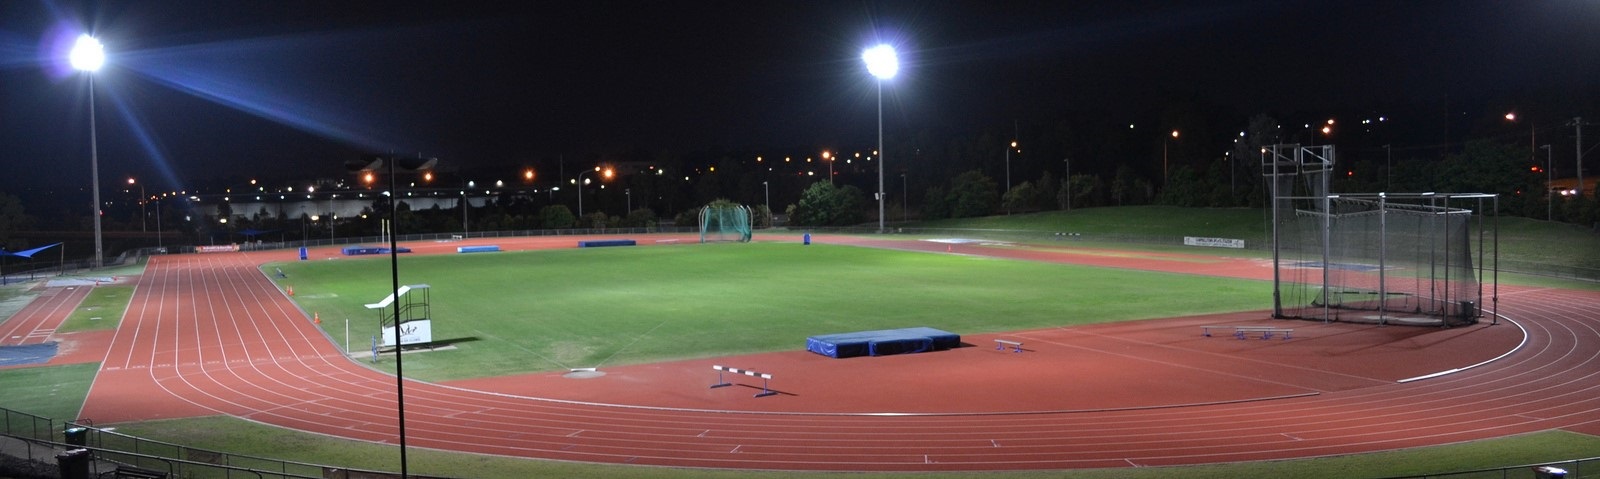 Athletics-Centre-image.jpg